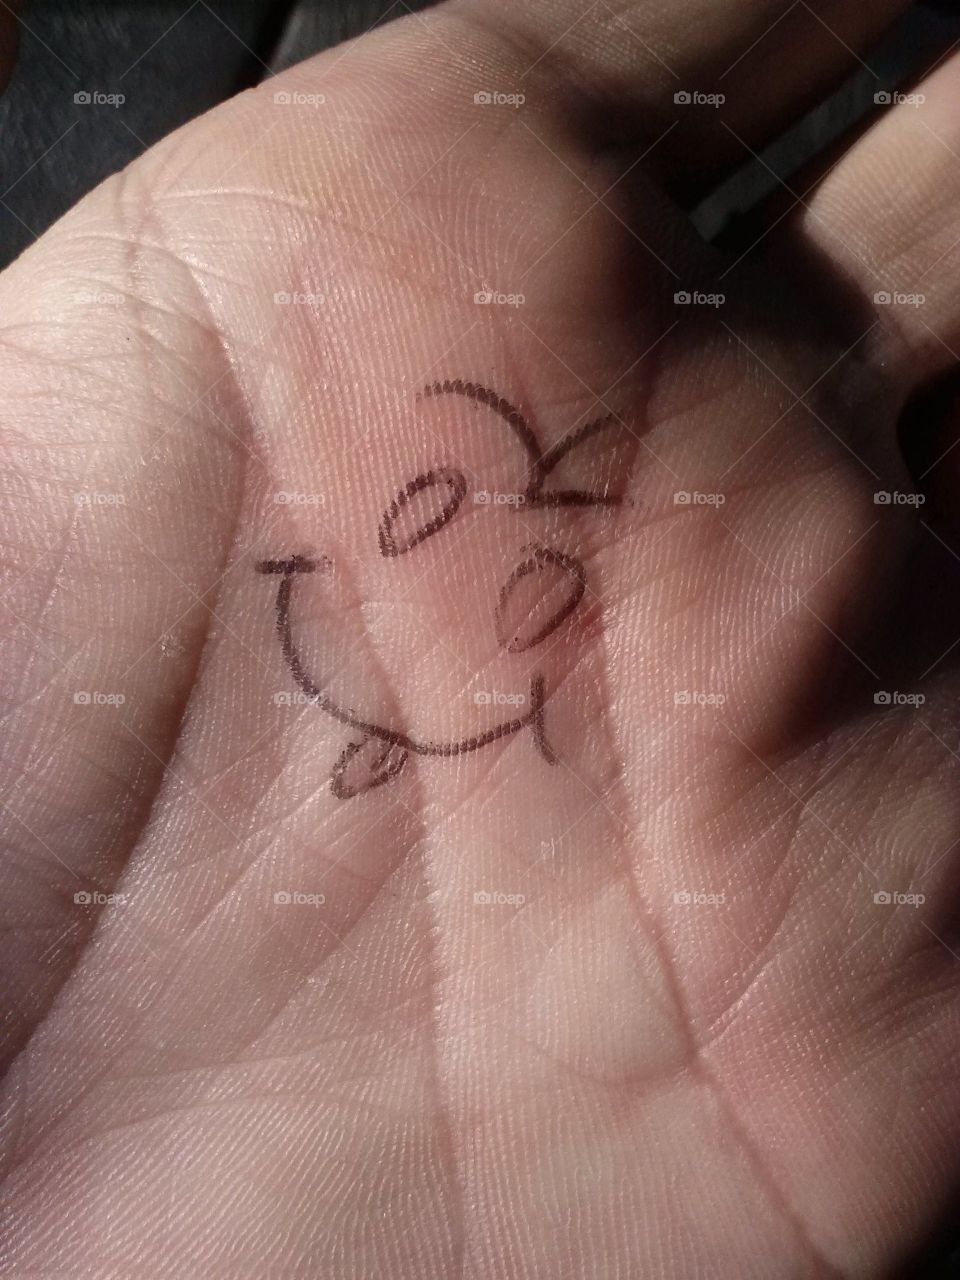 Palmala Handerson drawn on my Hand